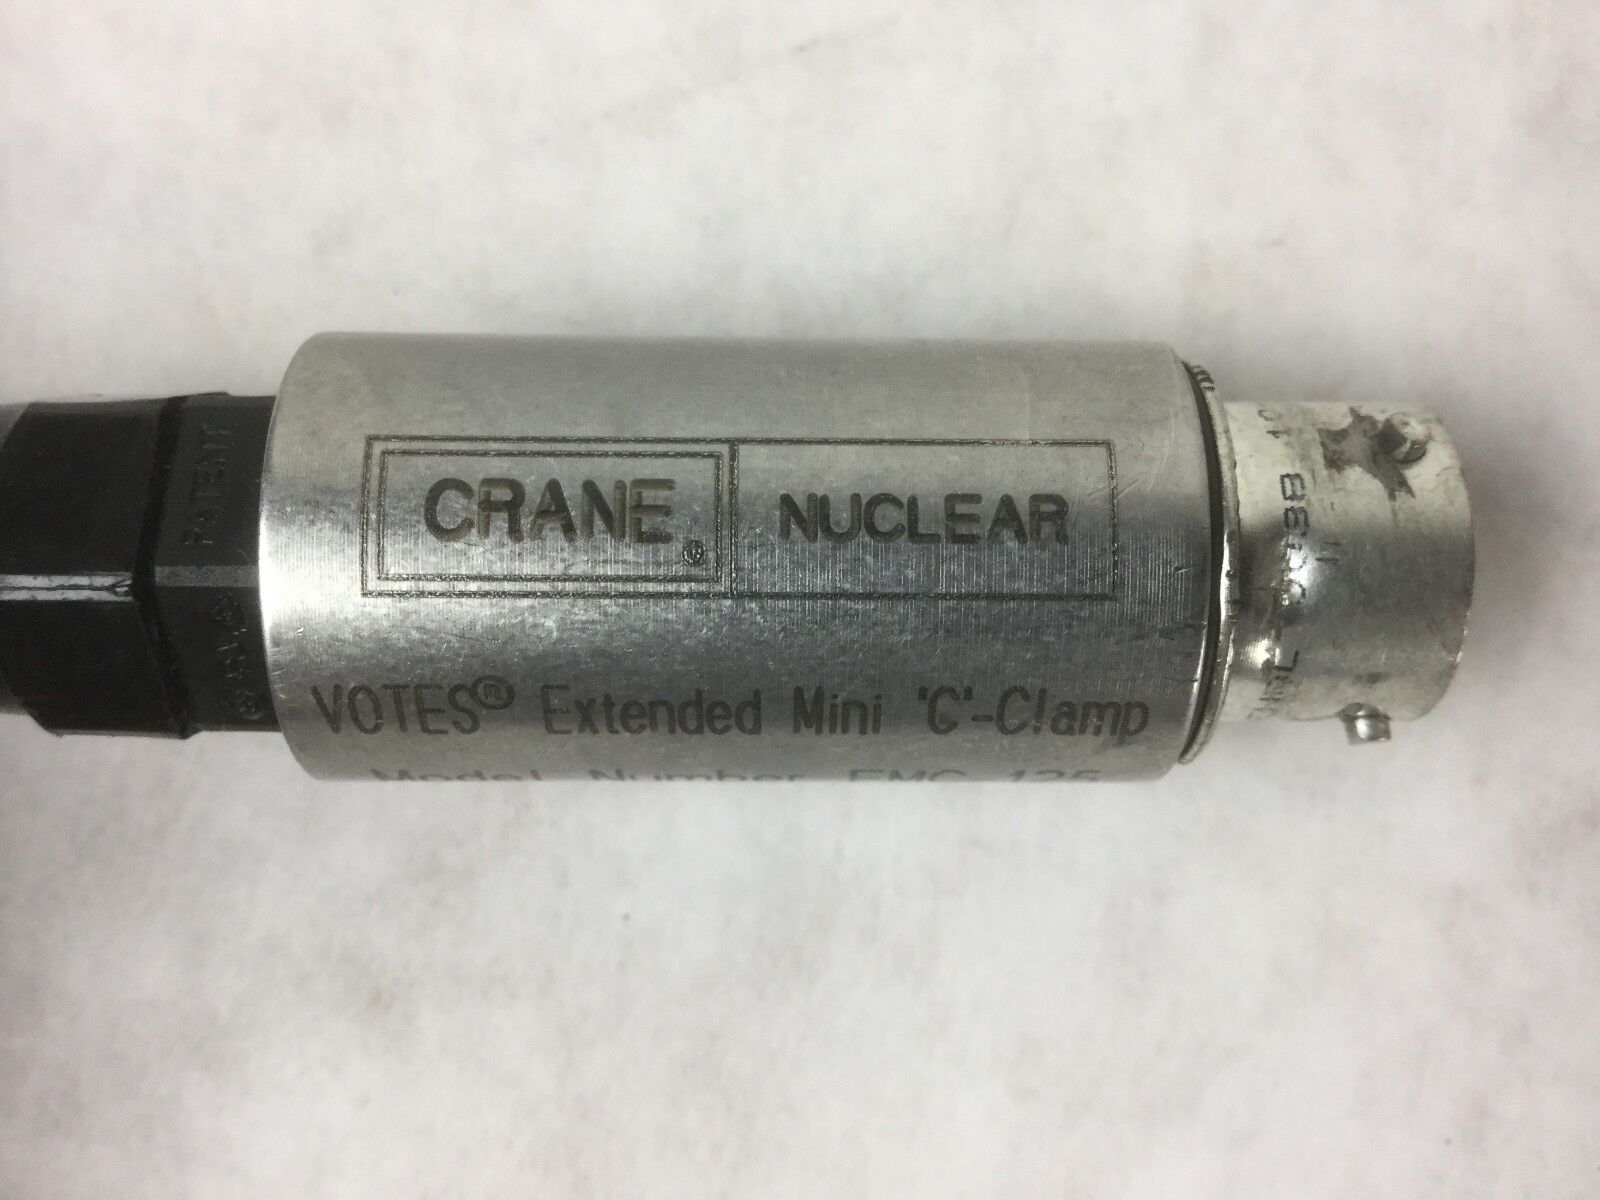 Crane EMC-125, Extended Mini "C"-Clamp Cal Sensor